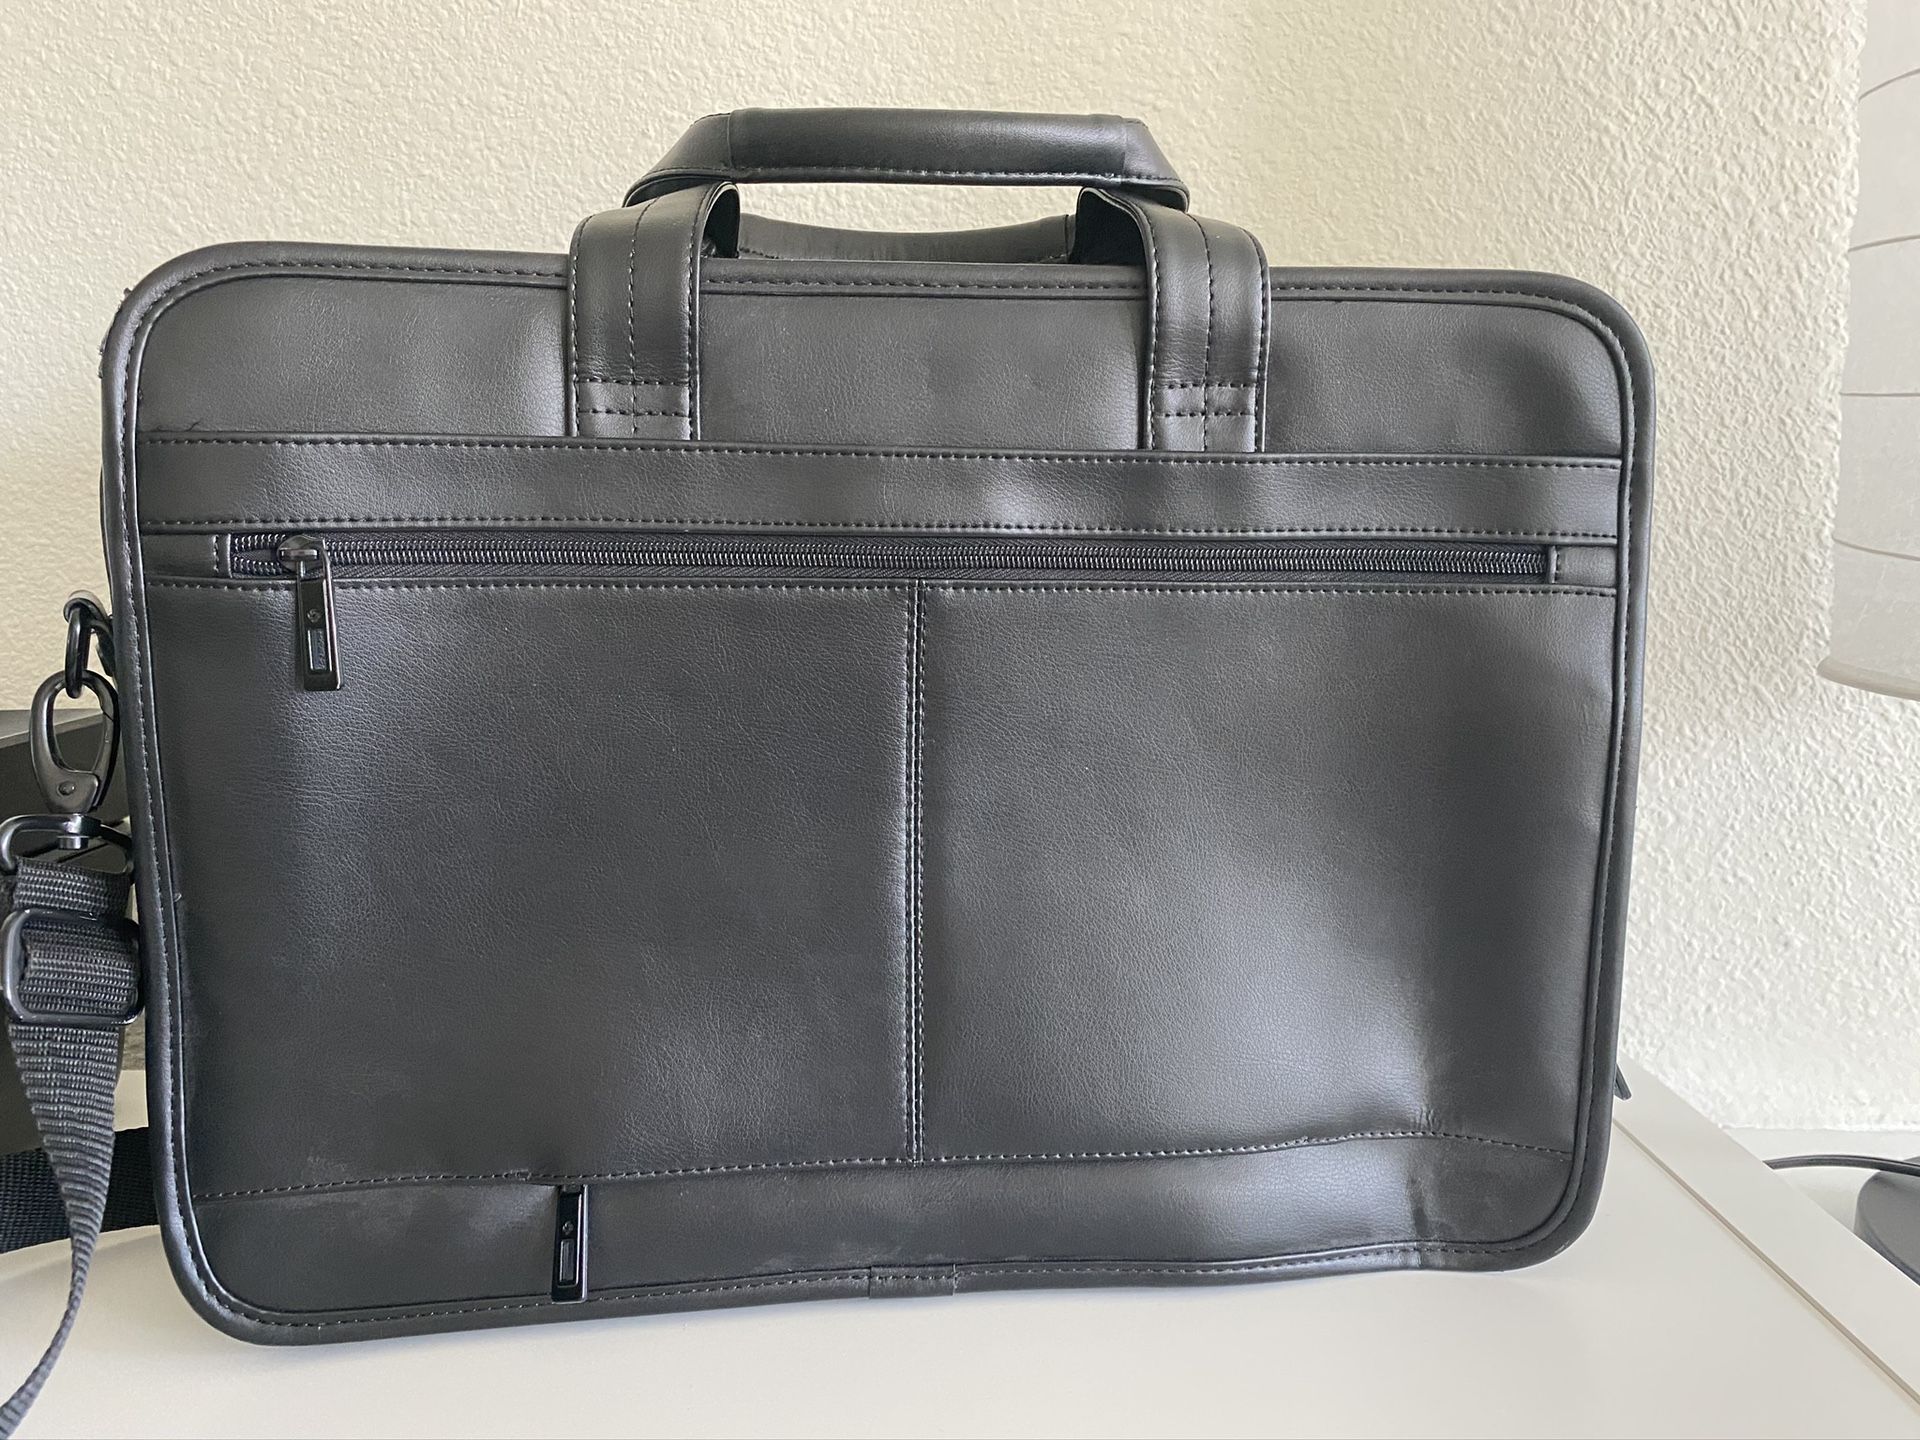 Black leather briefcase samsonite brand